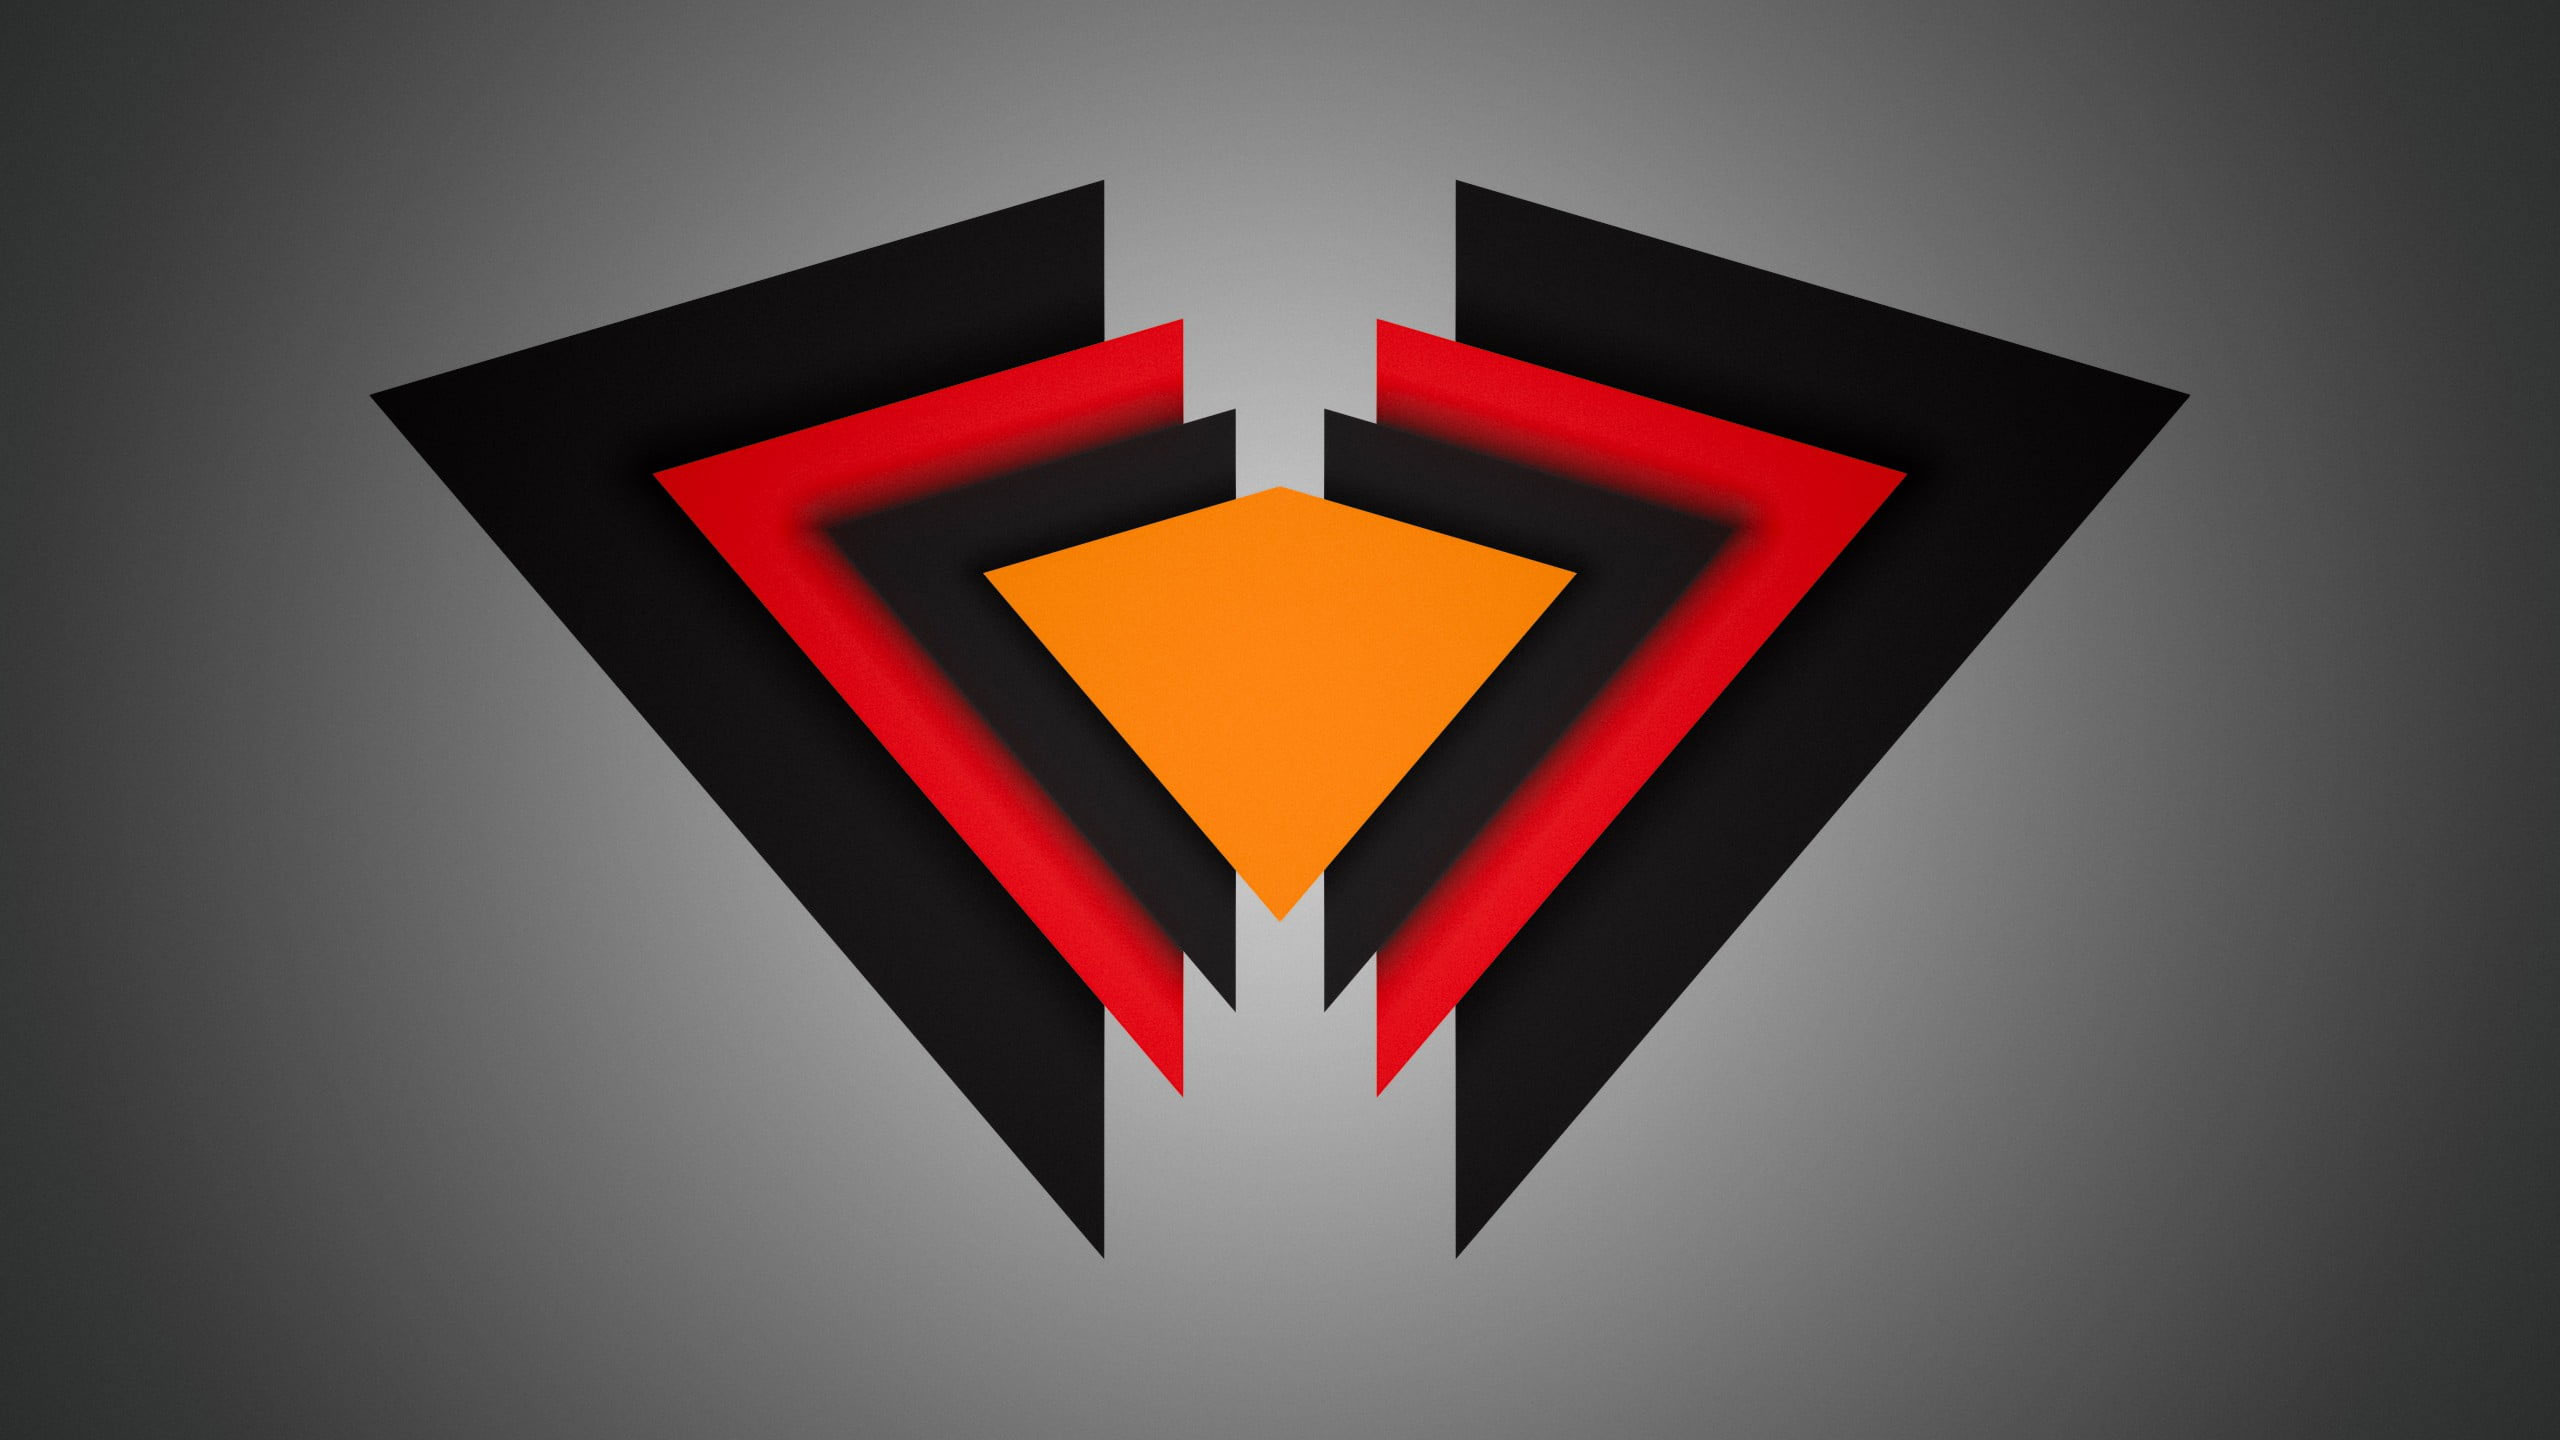 Red, orange, and black logo wallpaper, triangle